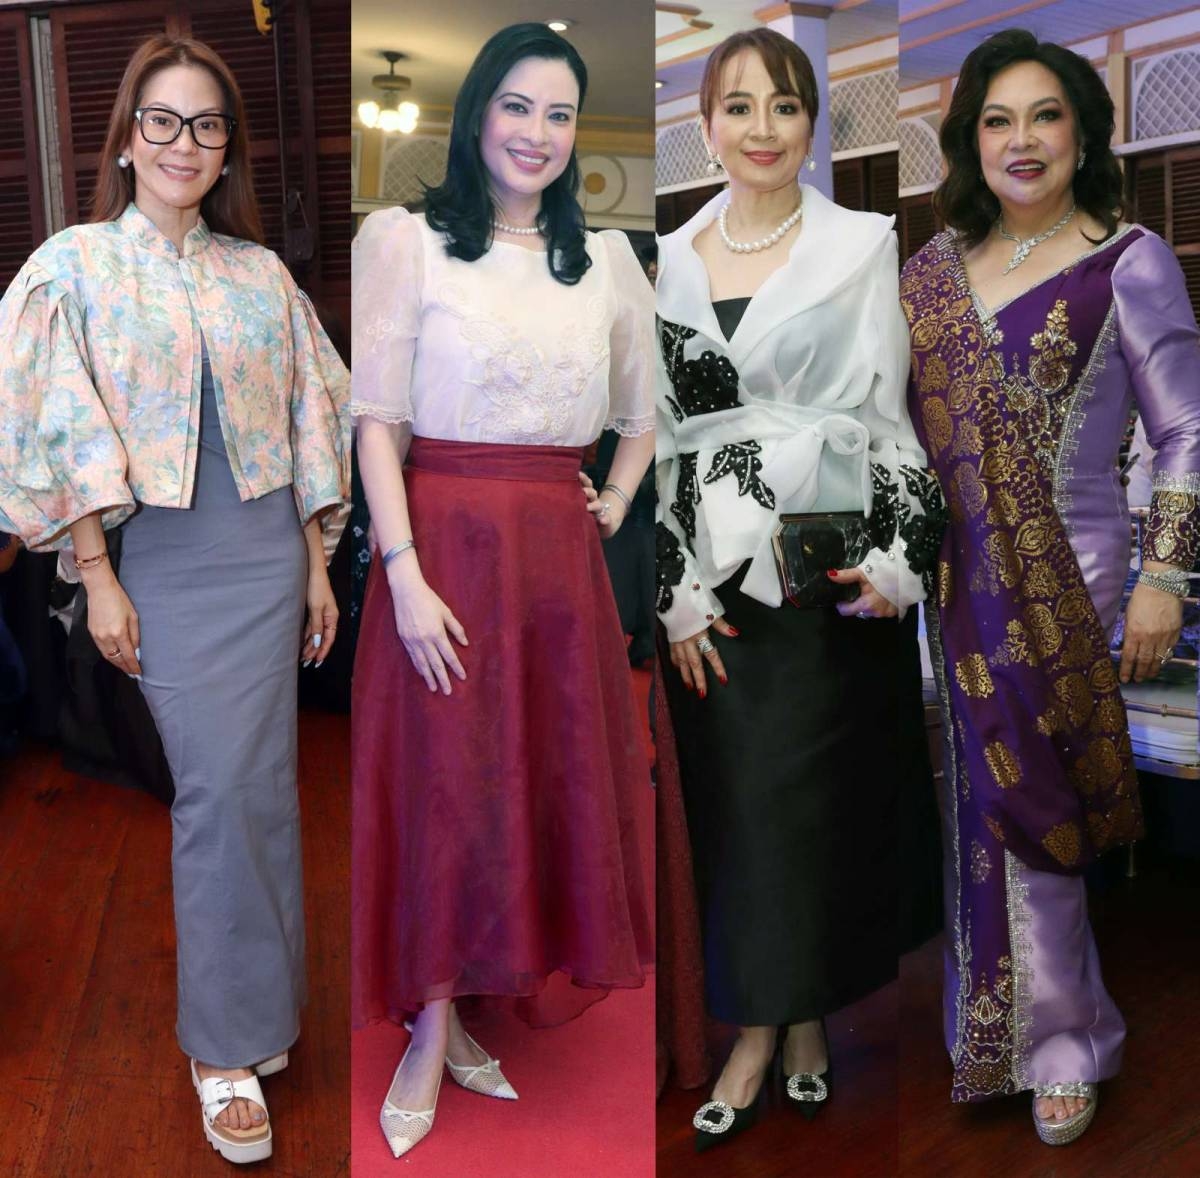 Maru Go, Tiffany Cuna, Marivic Aquino and Nelia Sarcol